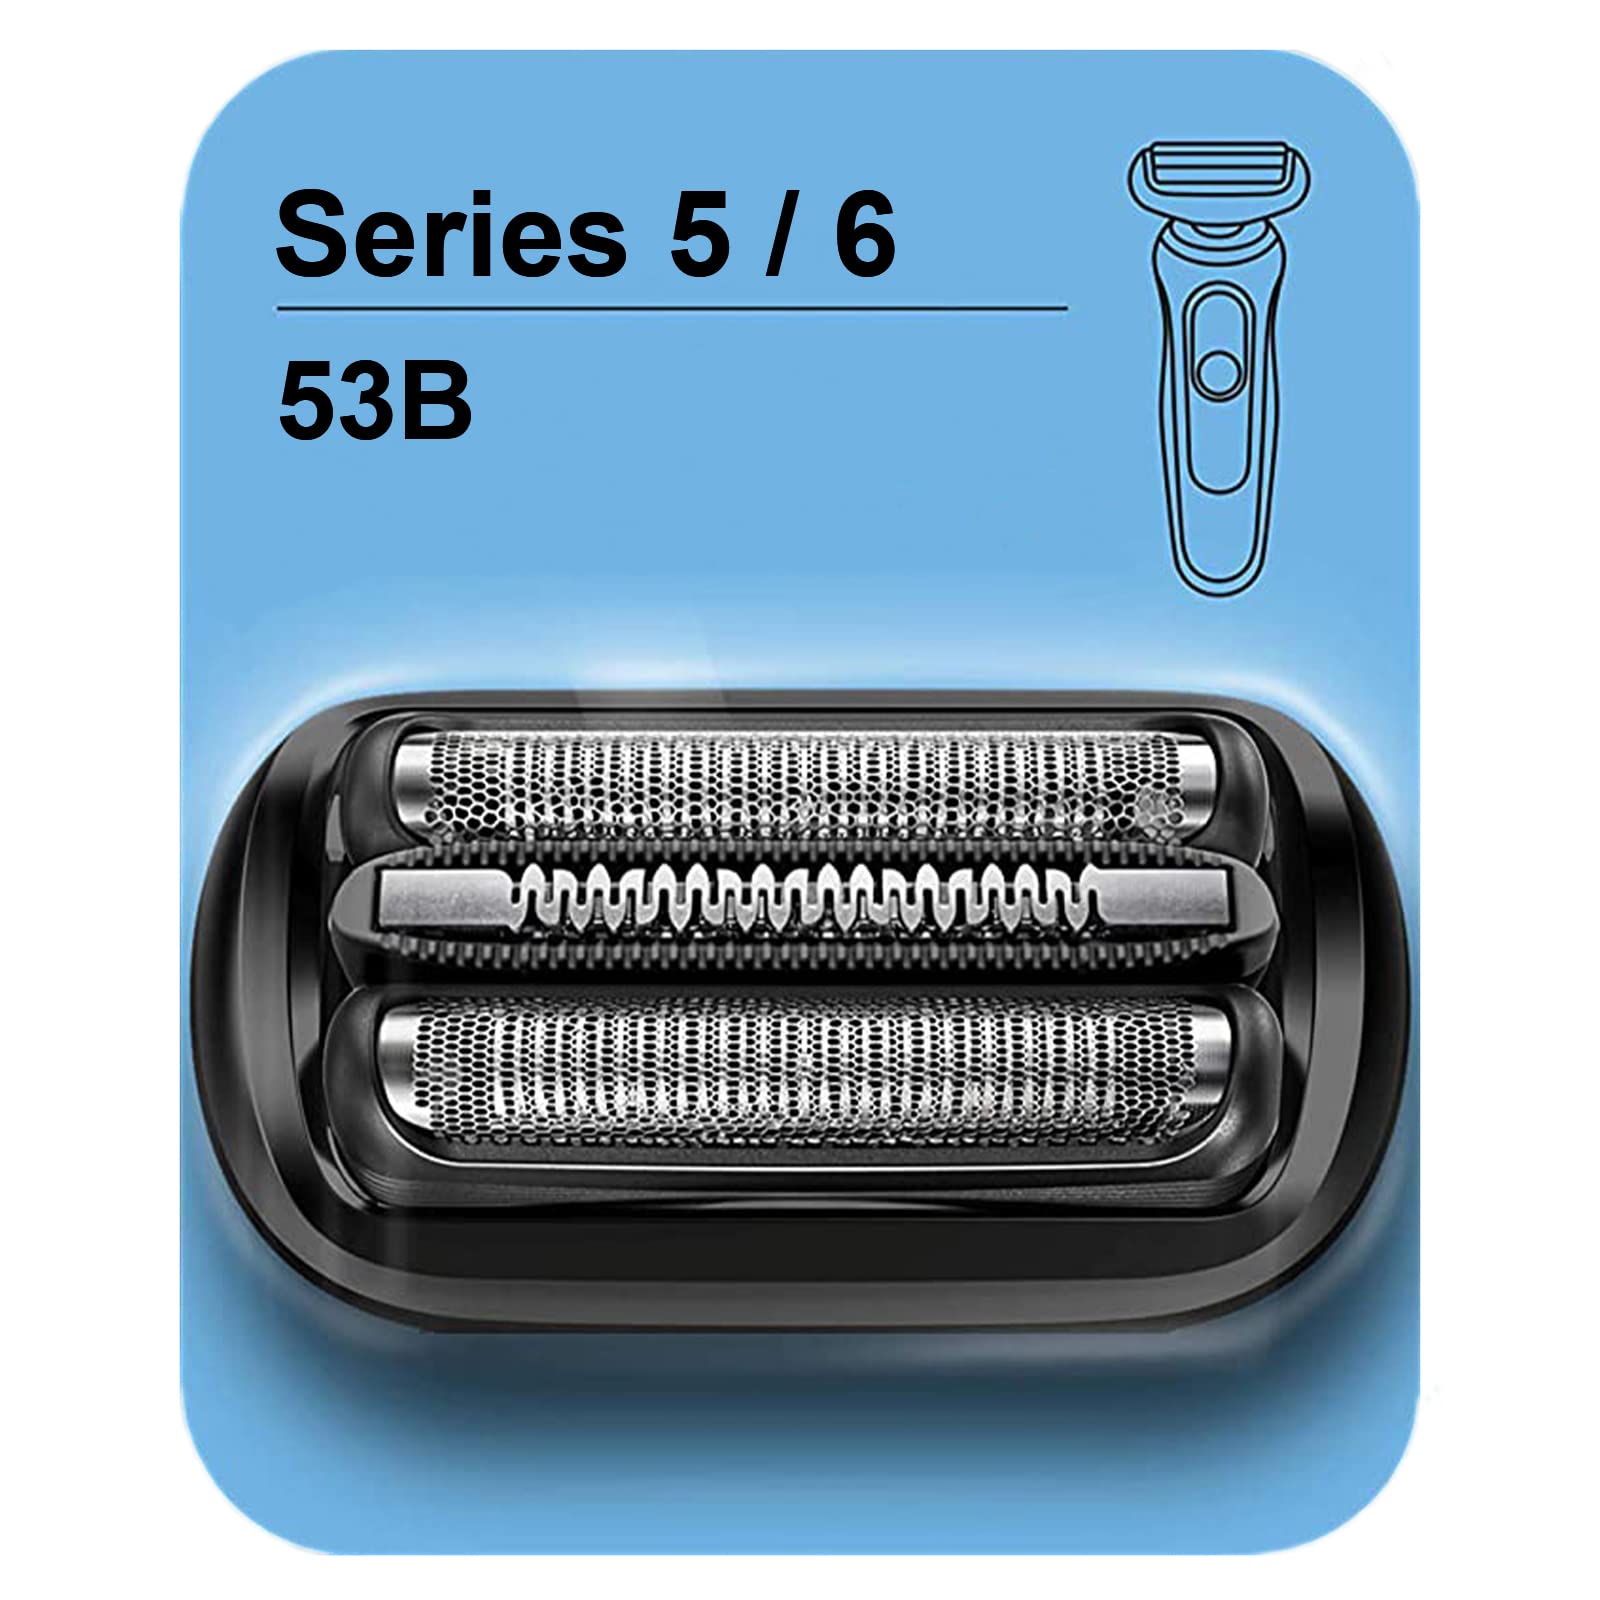 Series 5/6 53B Replacement Head for Braun Electric Foil Shaver Compatible  with New Generation Braun Razors 5020cs 5018s 5035s 5049cs 5050cs 6020s  6040cs 6075cc 6072cc 6090cc (1 Count)